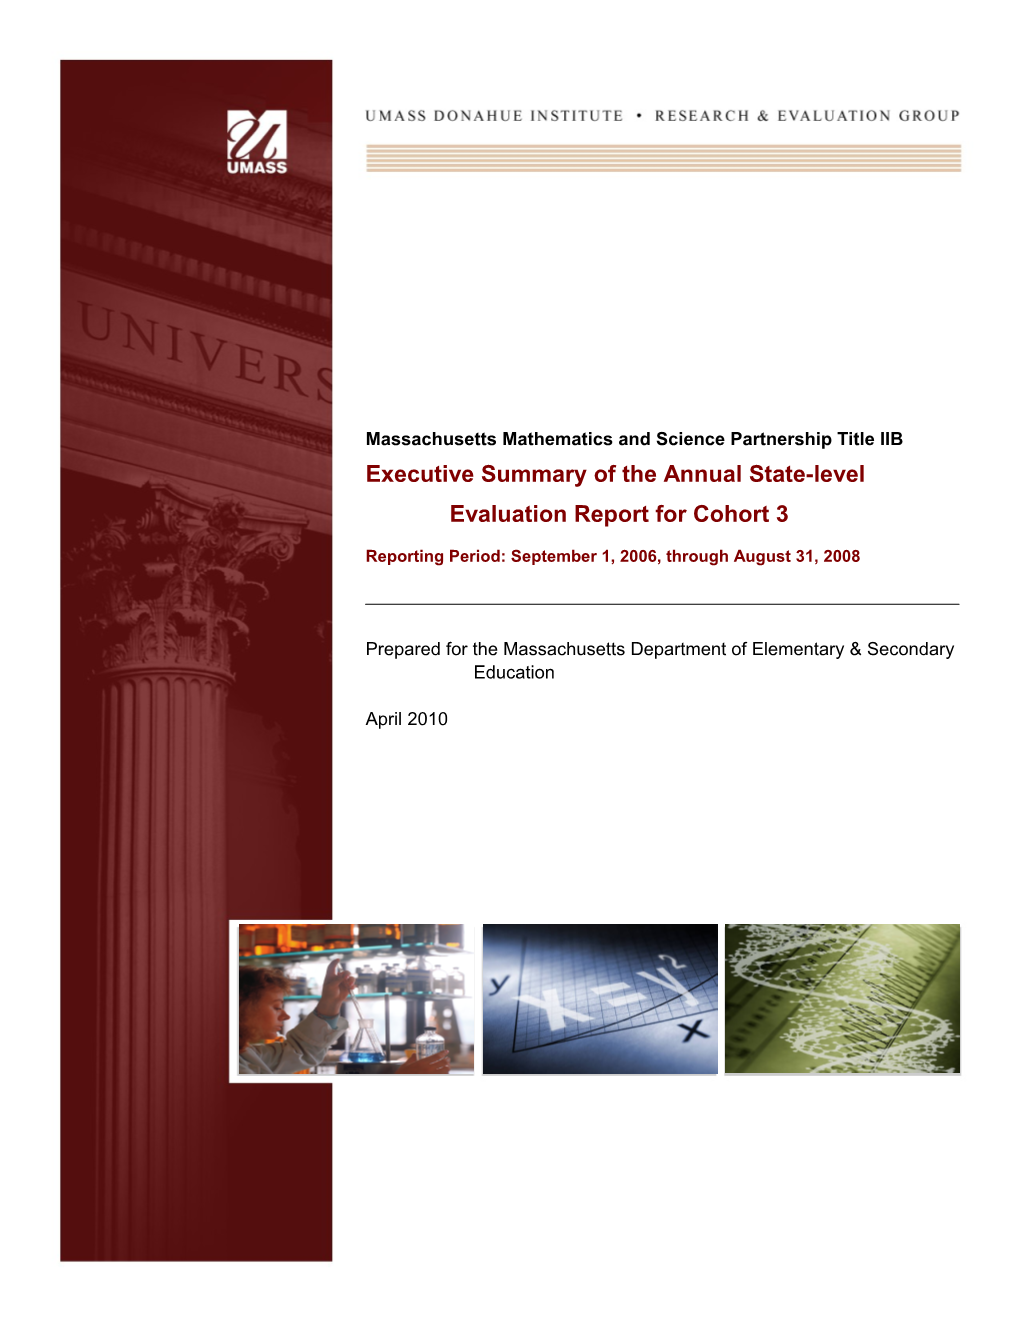 2006-2008 Executive Summary of MMSP Evaluation Report